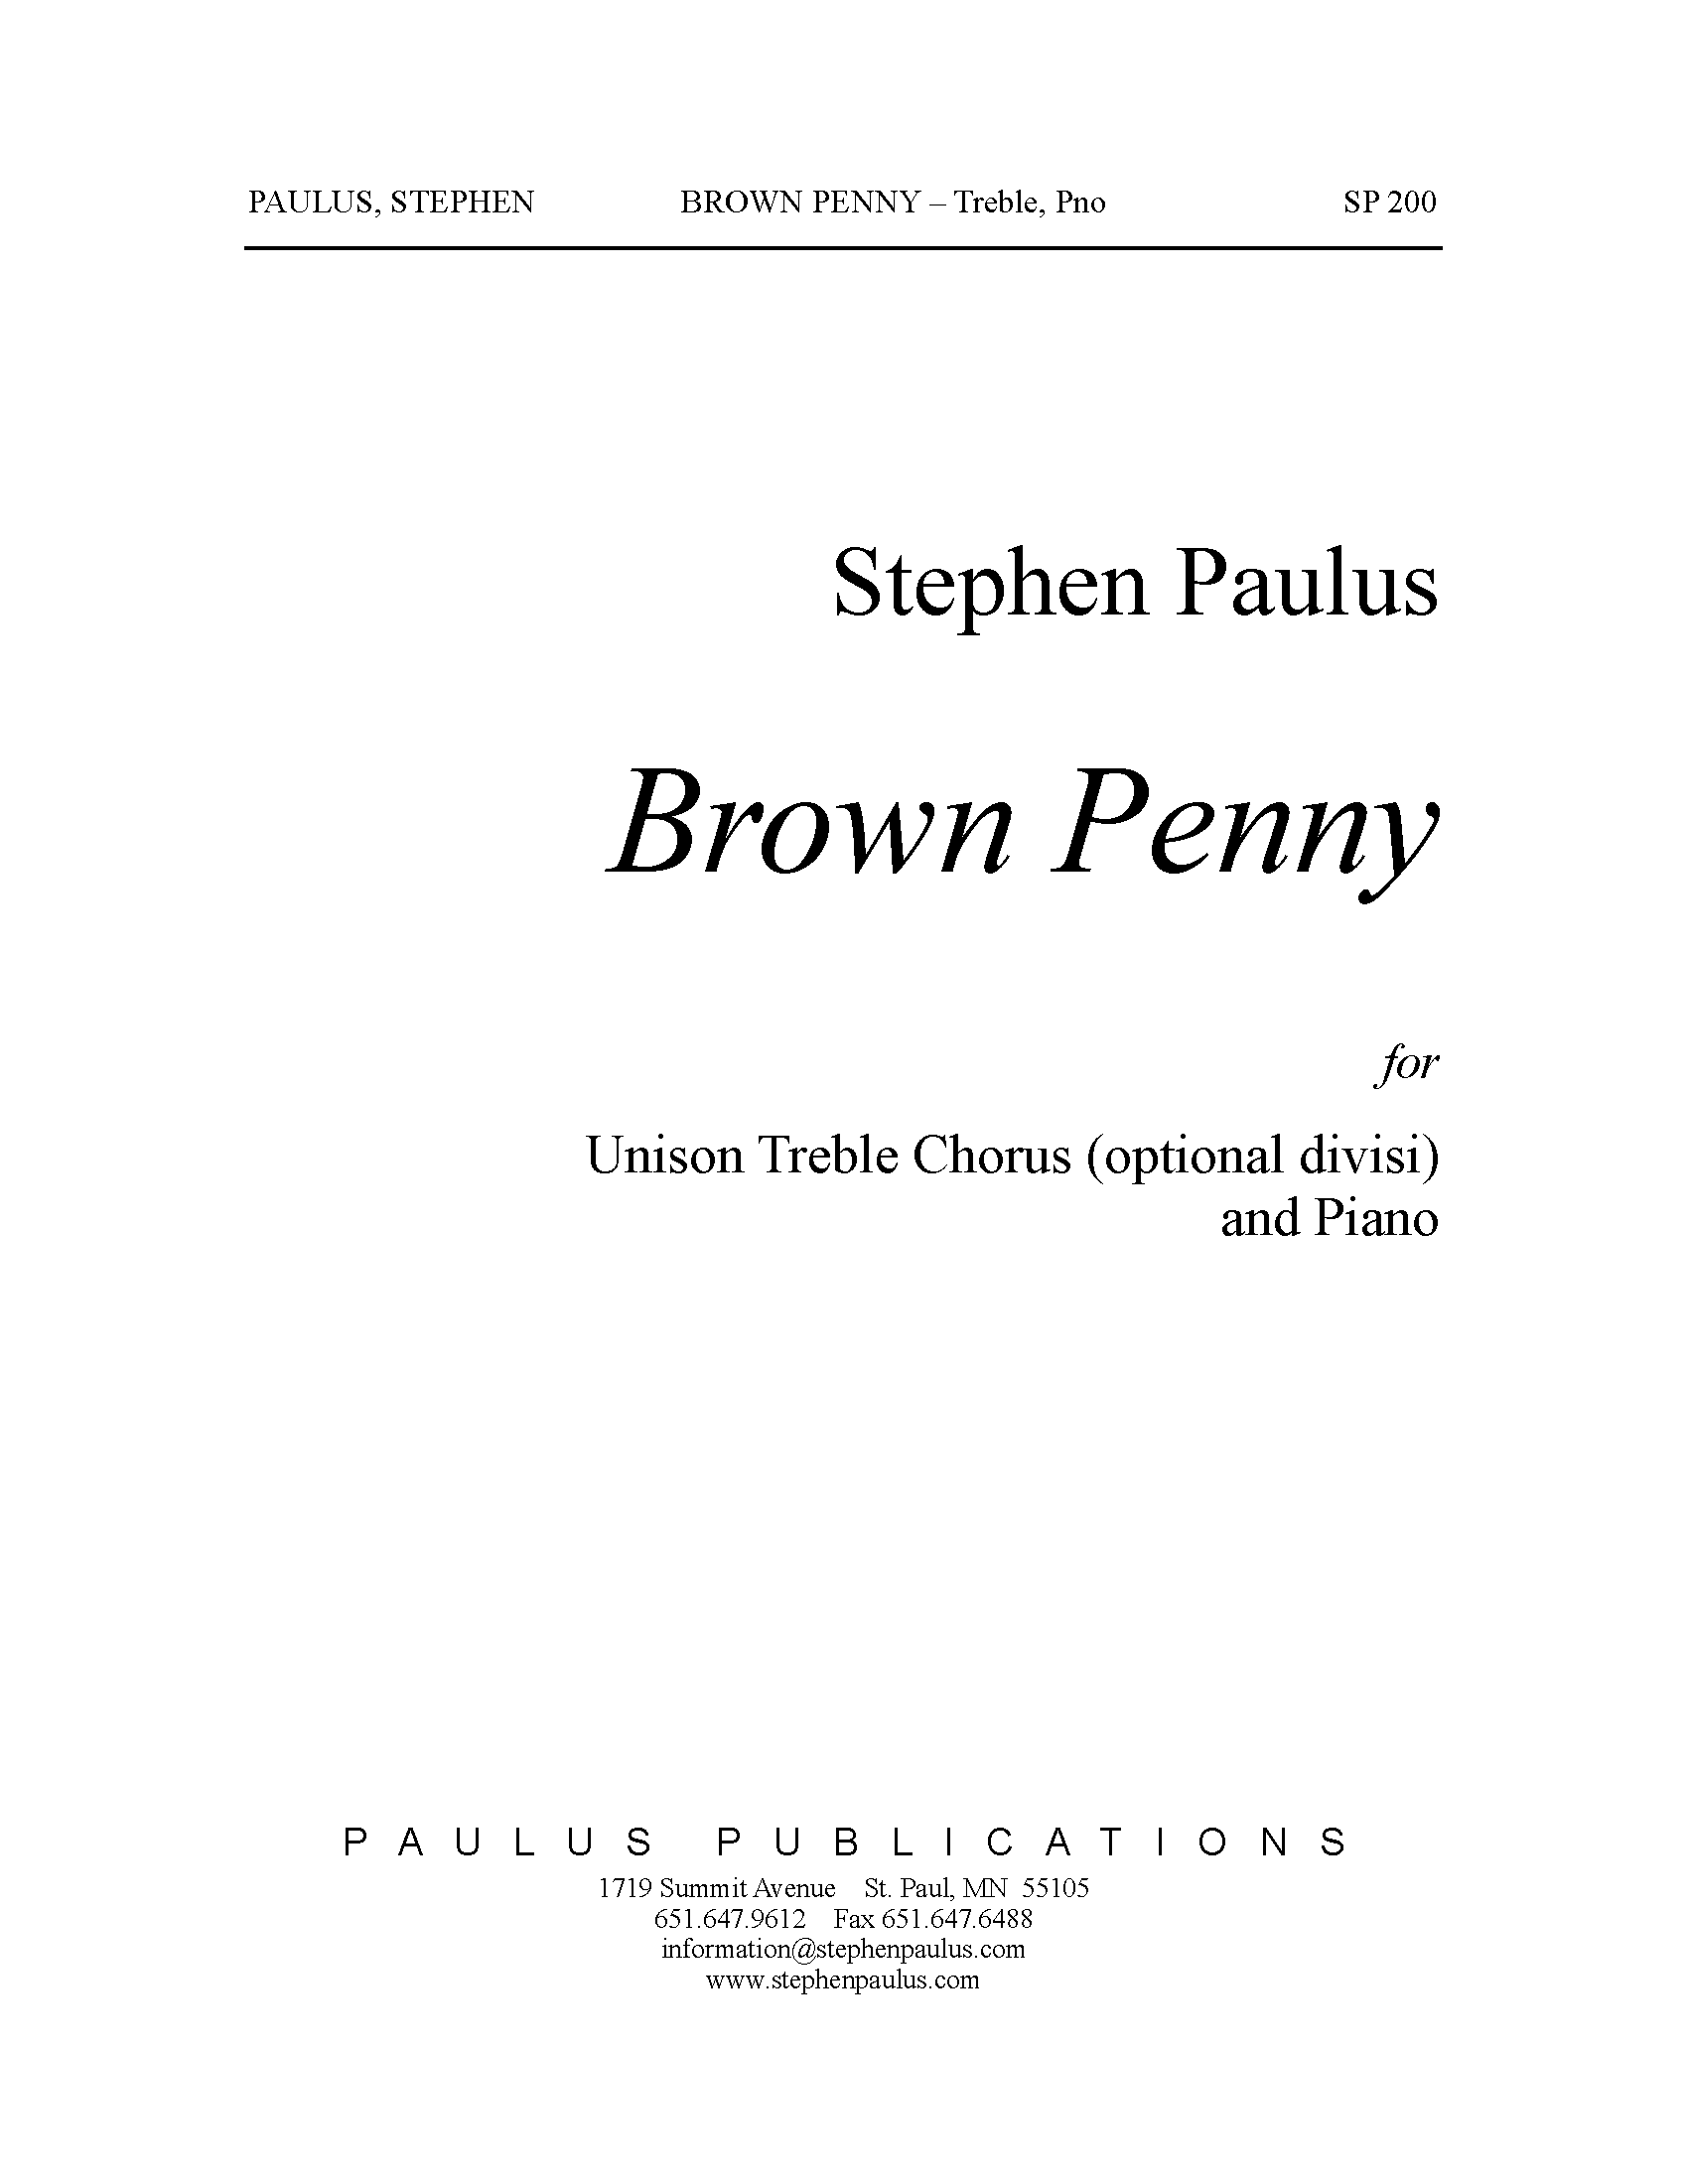 Brown Penny for Unison Treble Chorus